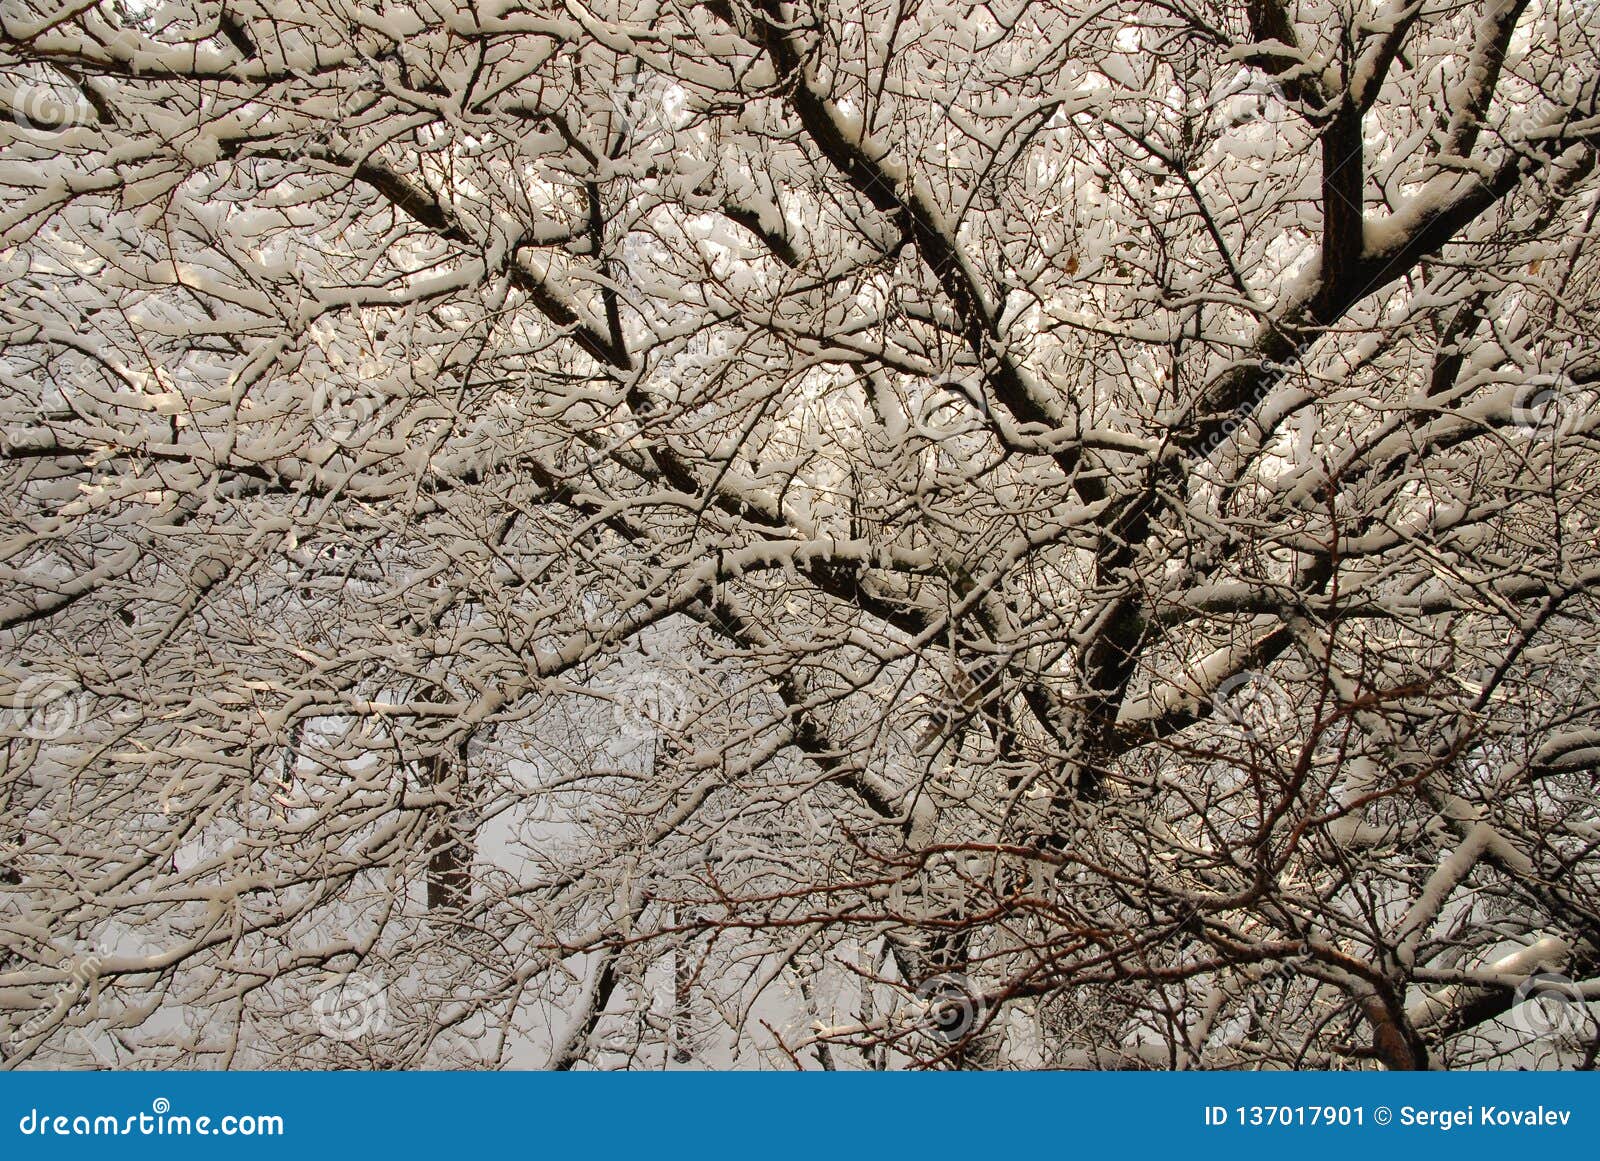 winter trees in lugansk